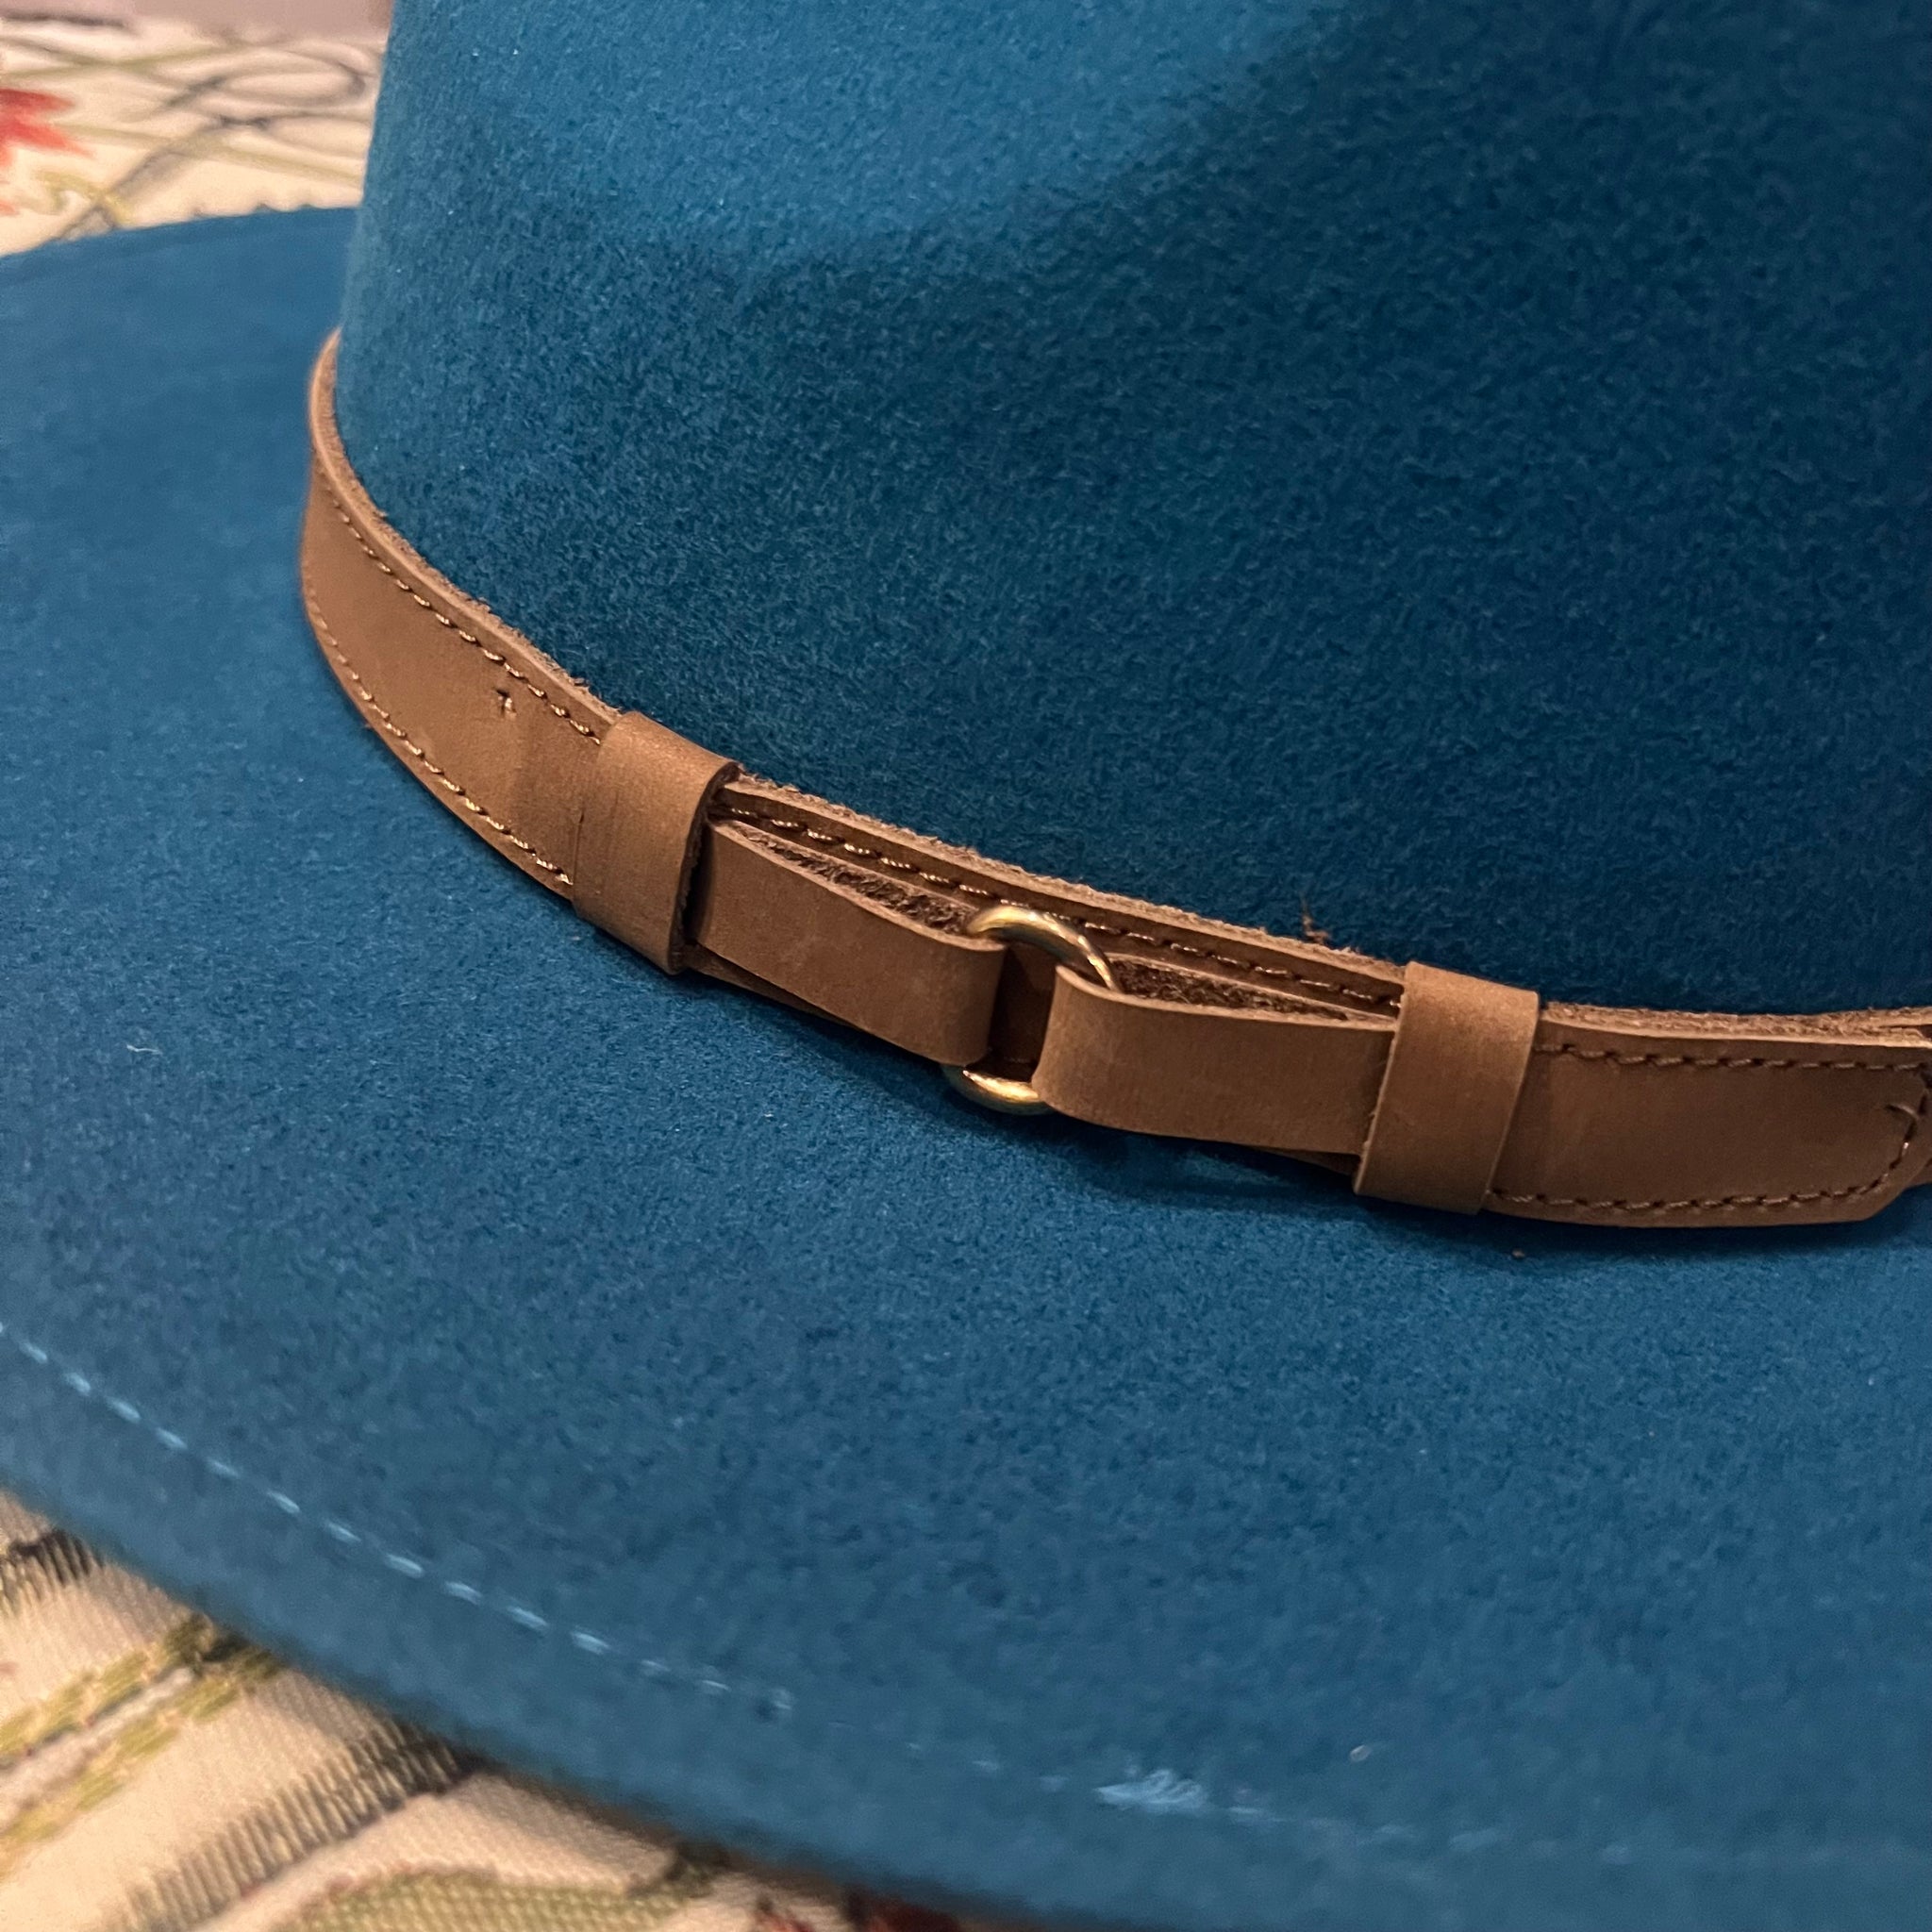 Ranger Style Wool Fedora Hat